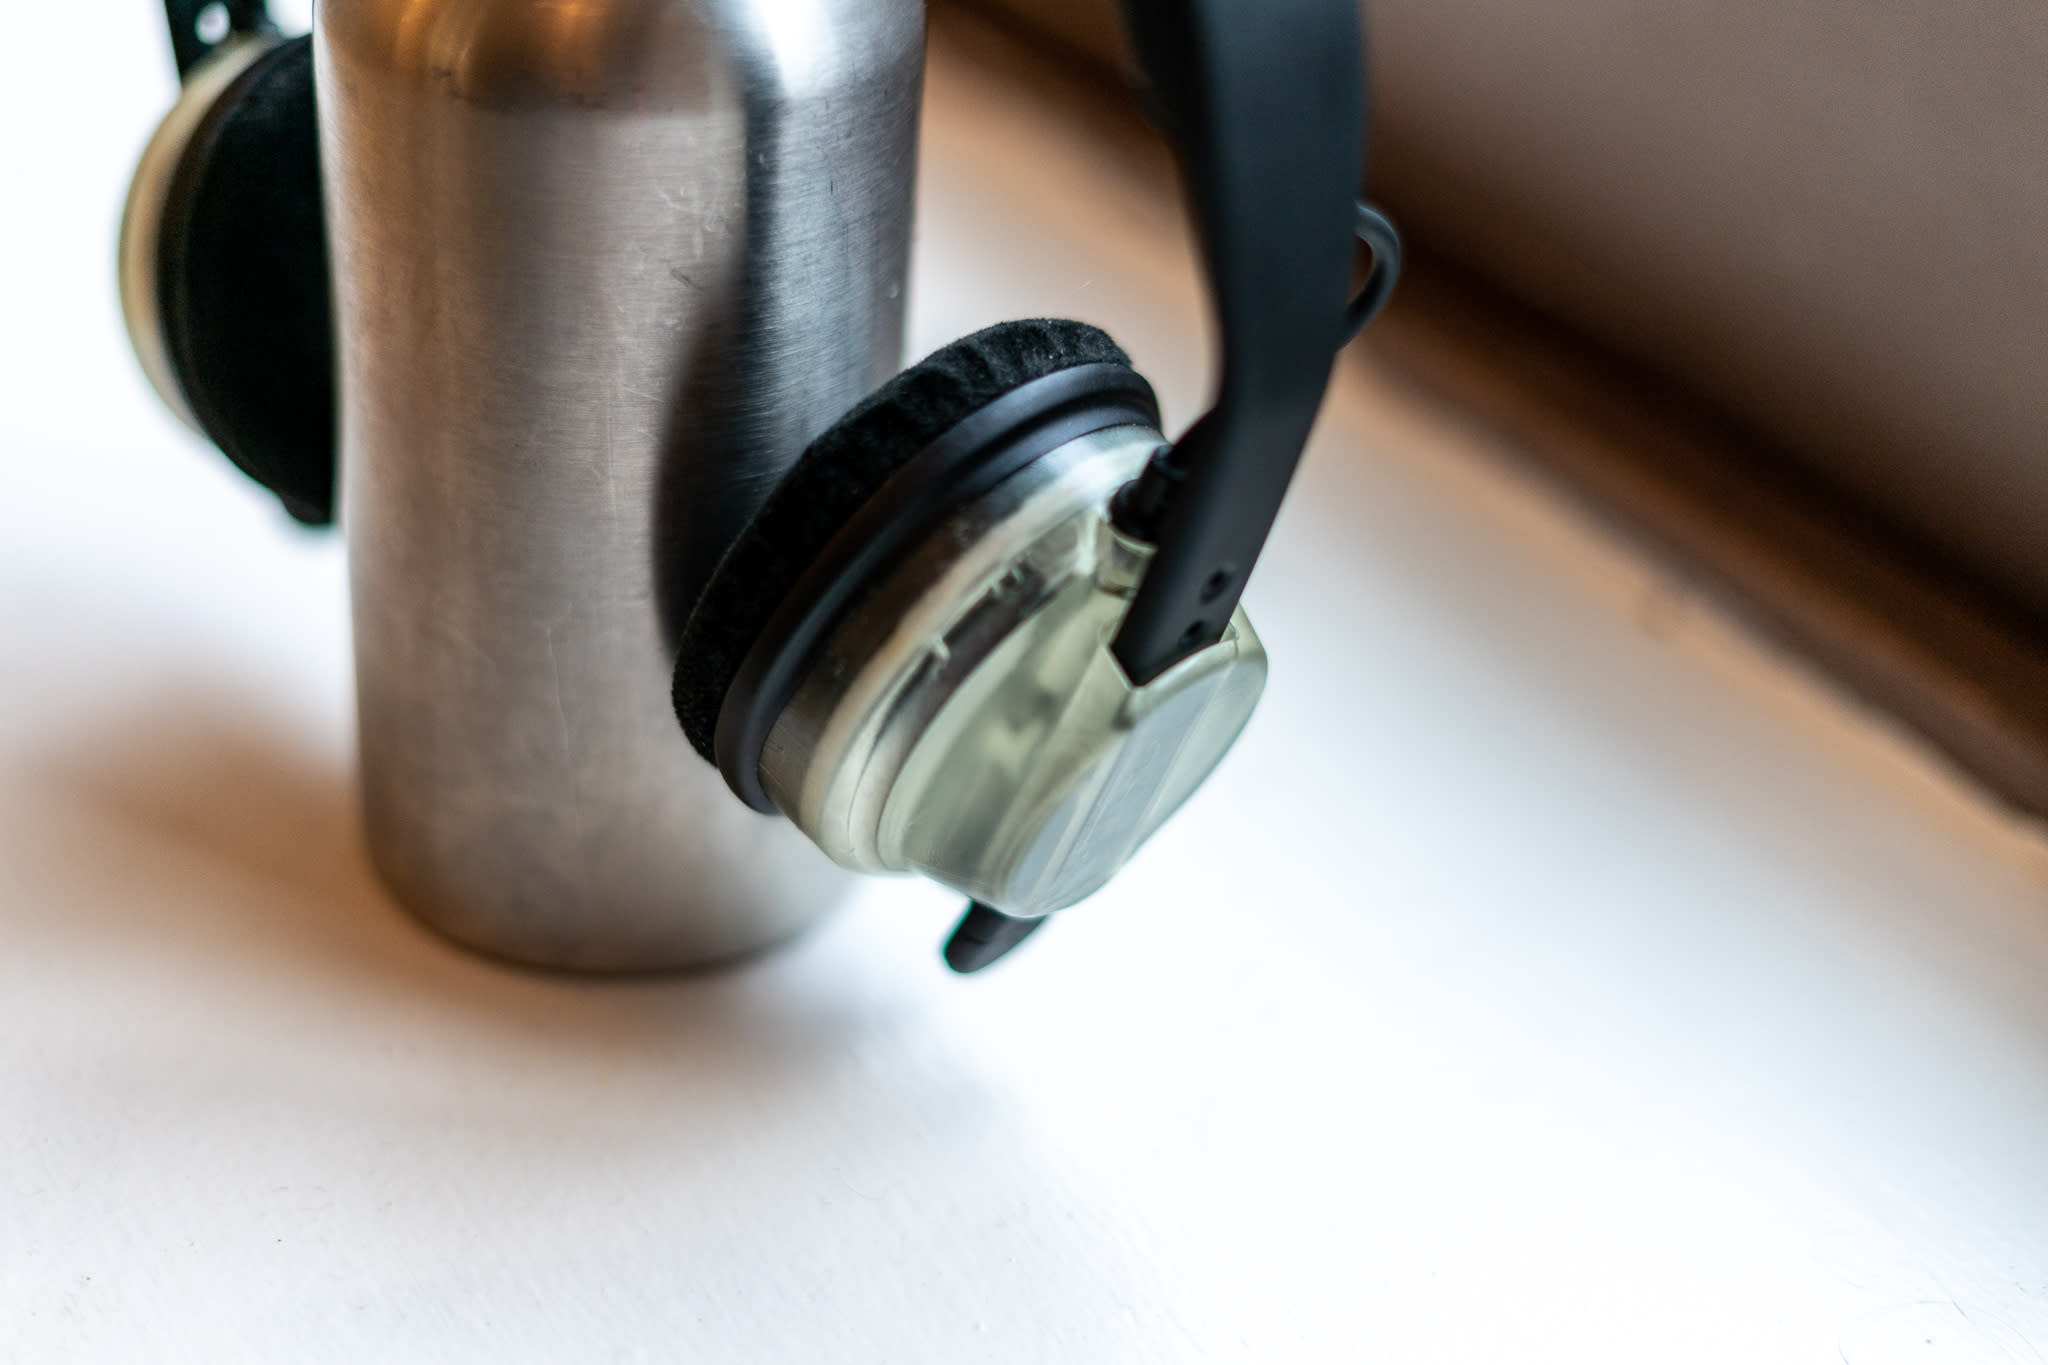 AIAIAI Sennheiser Wireless Frankenstein Headphones - Clear cups